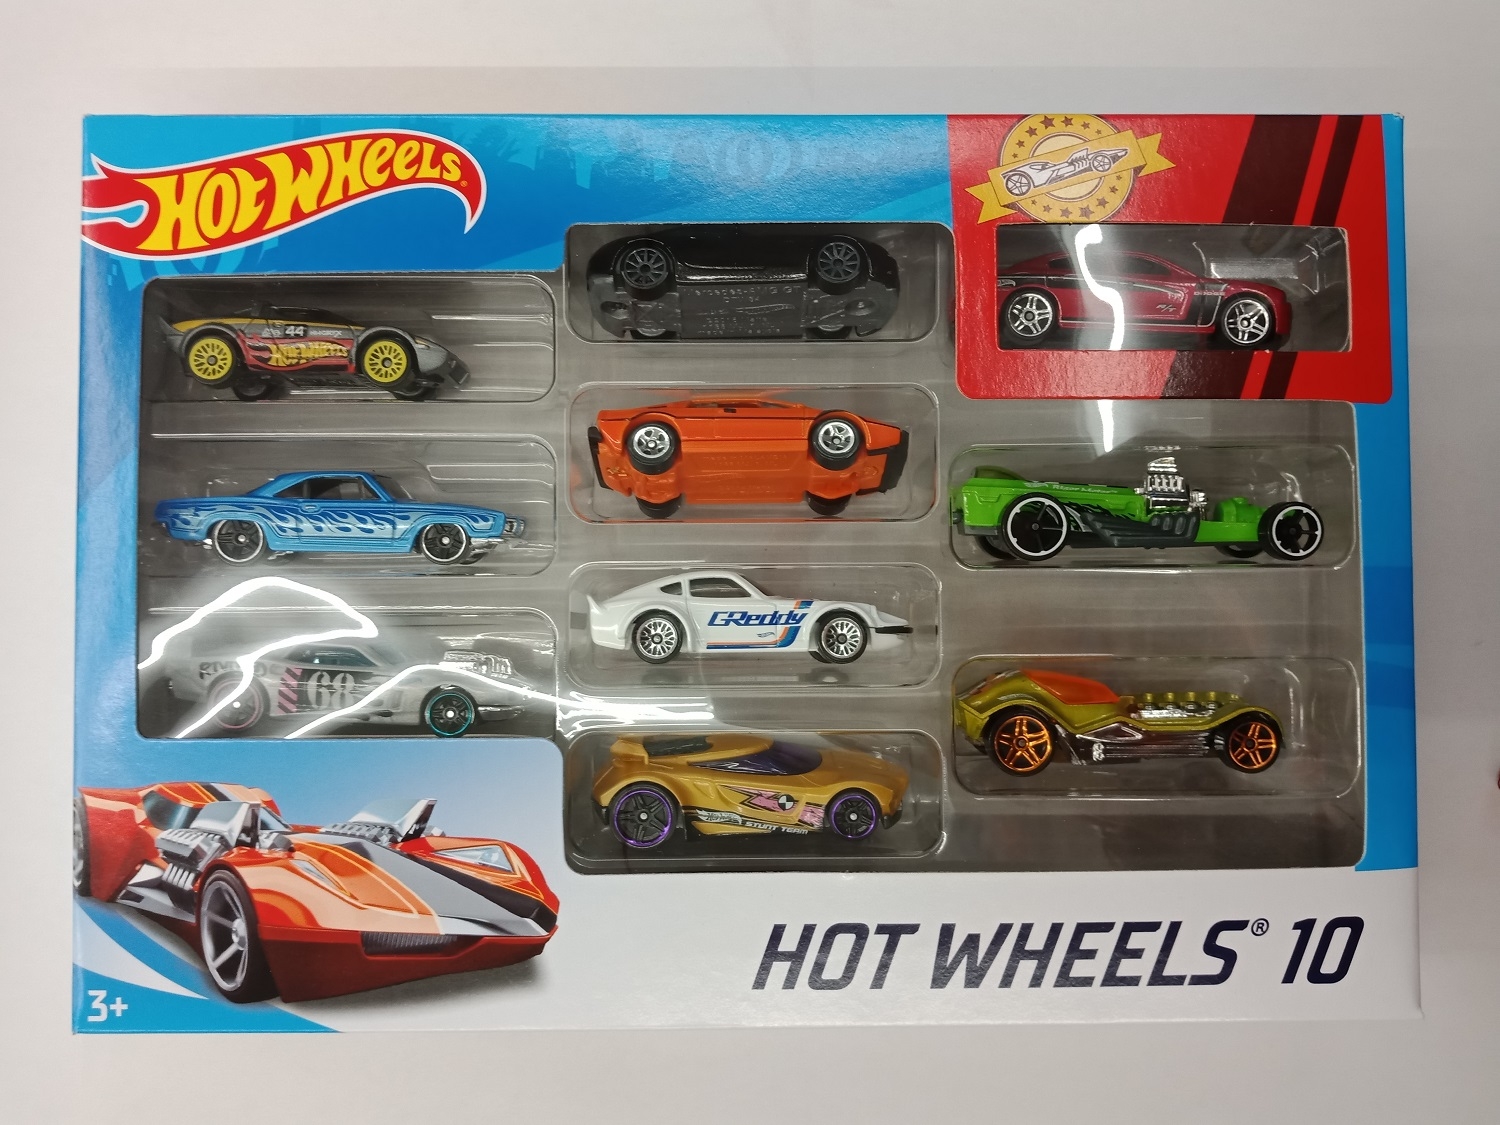 10 hot wheels